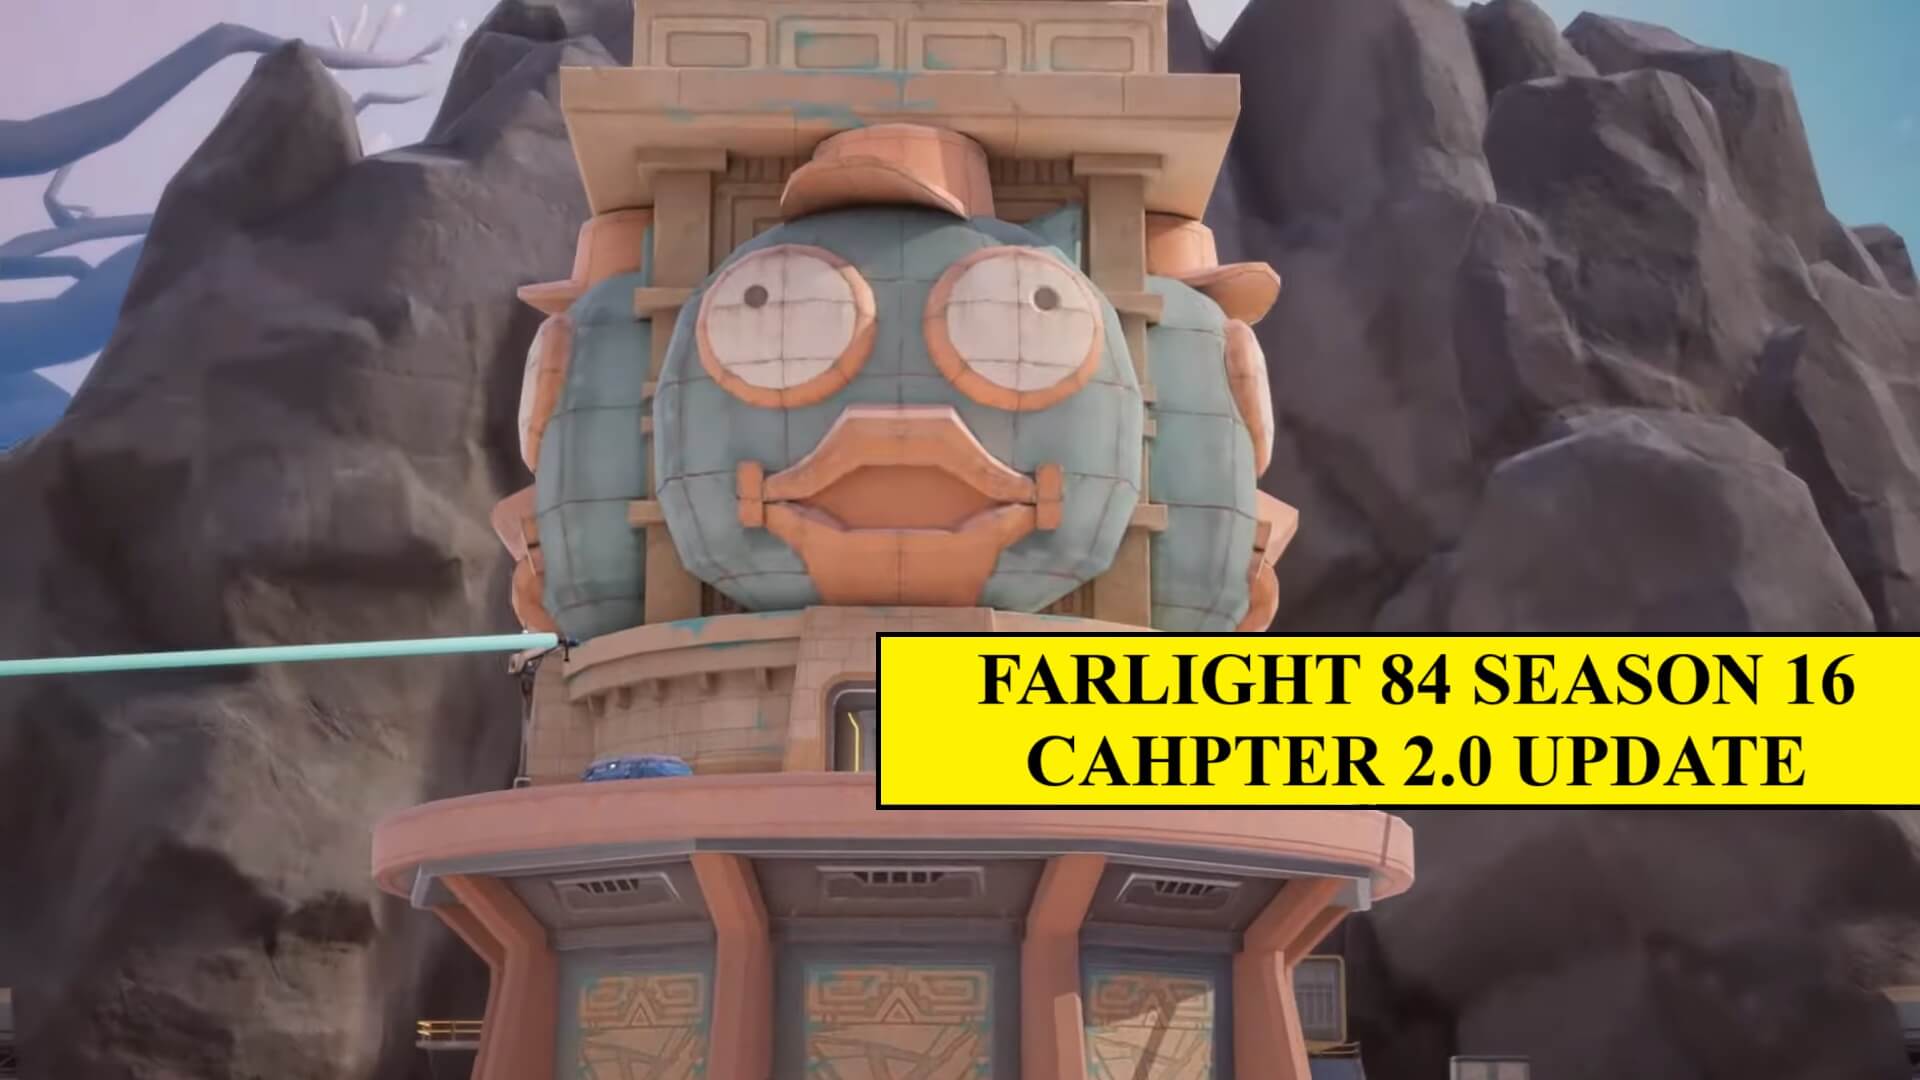 Farlight 84 Season 16 - Chapter 2.0 Update